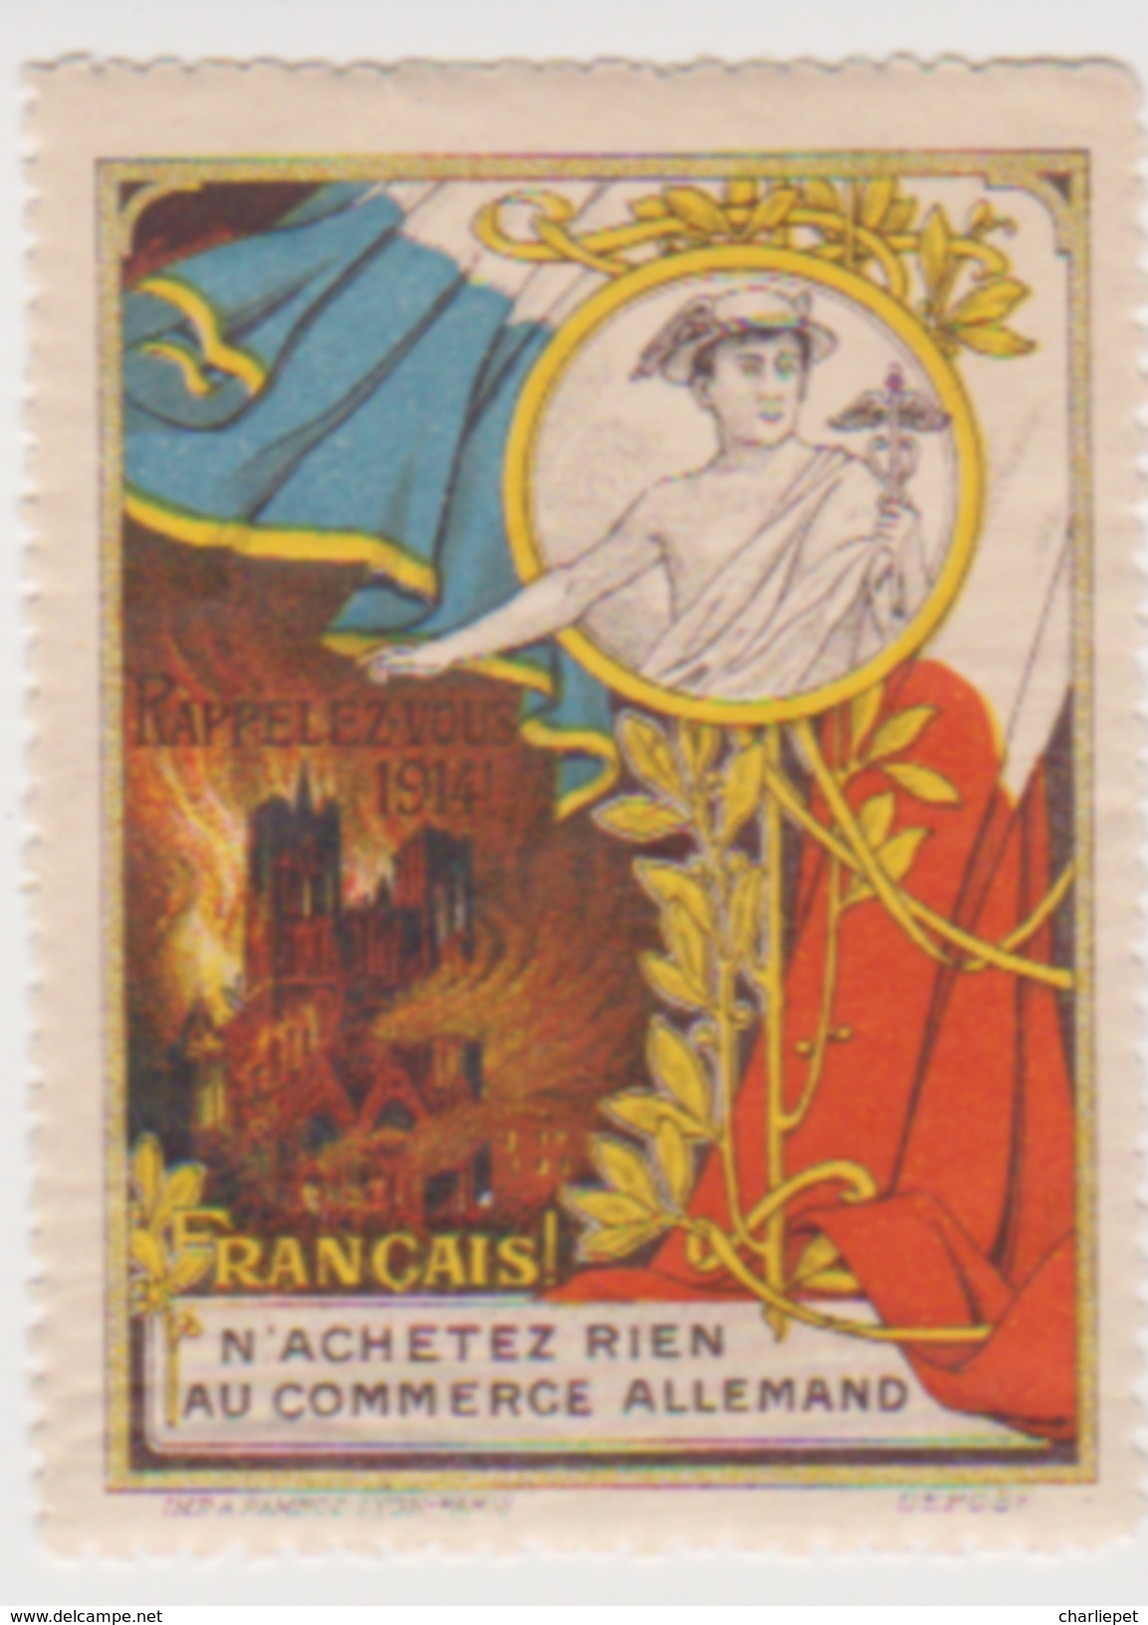 France WWI Anti German Propaganda Stamps Vignette Poster Stamp - Vignette Militari